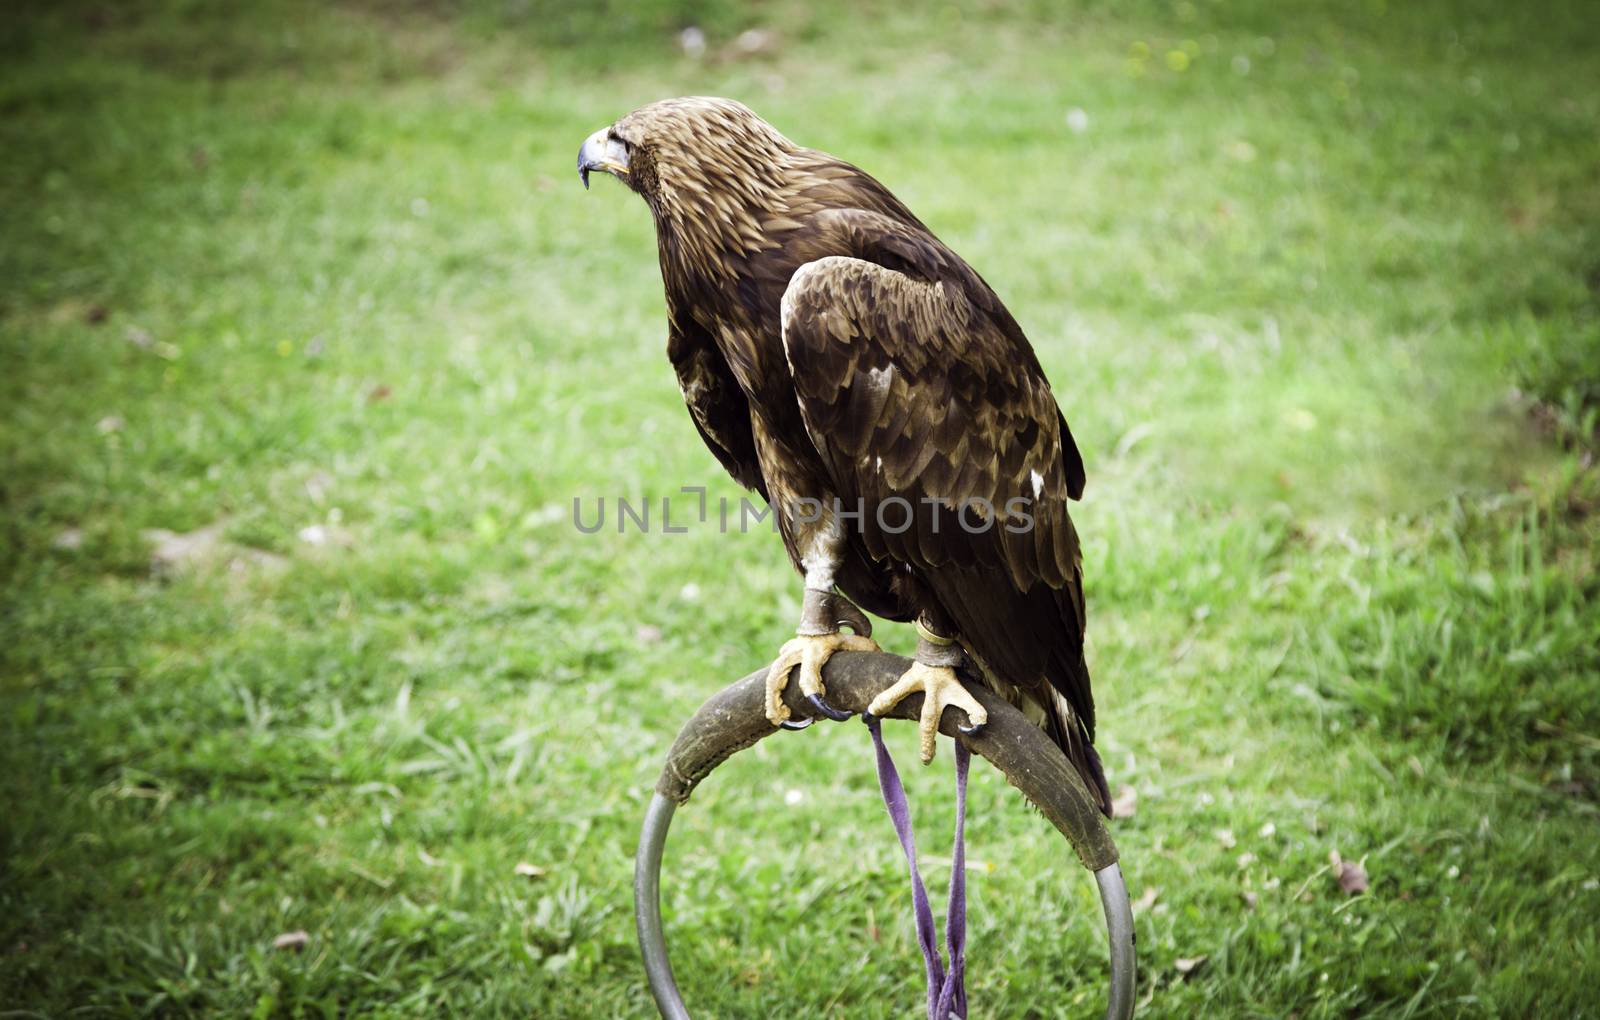 Protected Eagle by esebene